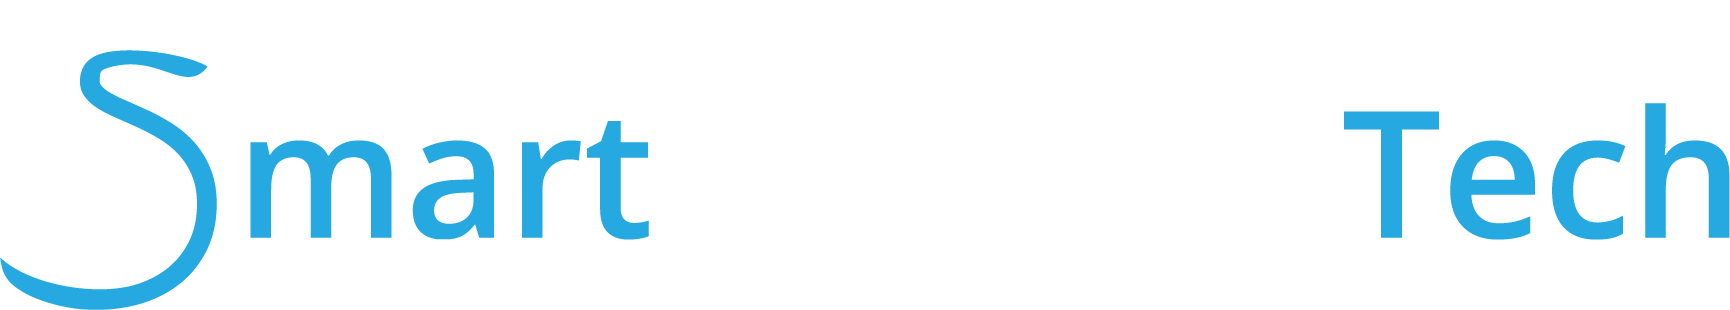 Smart Houses Technology Logo - SmartHousesTech